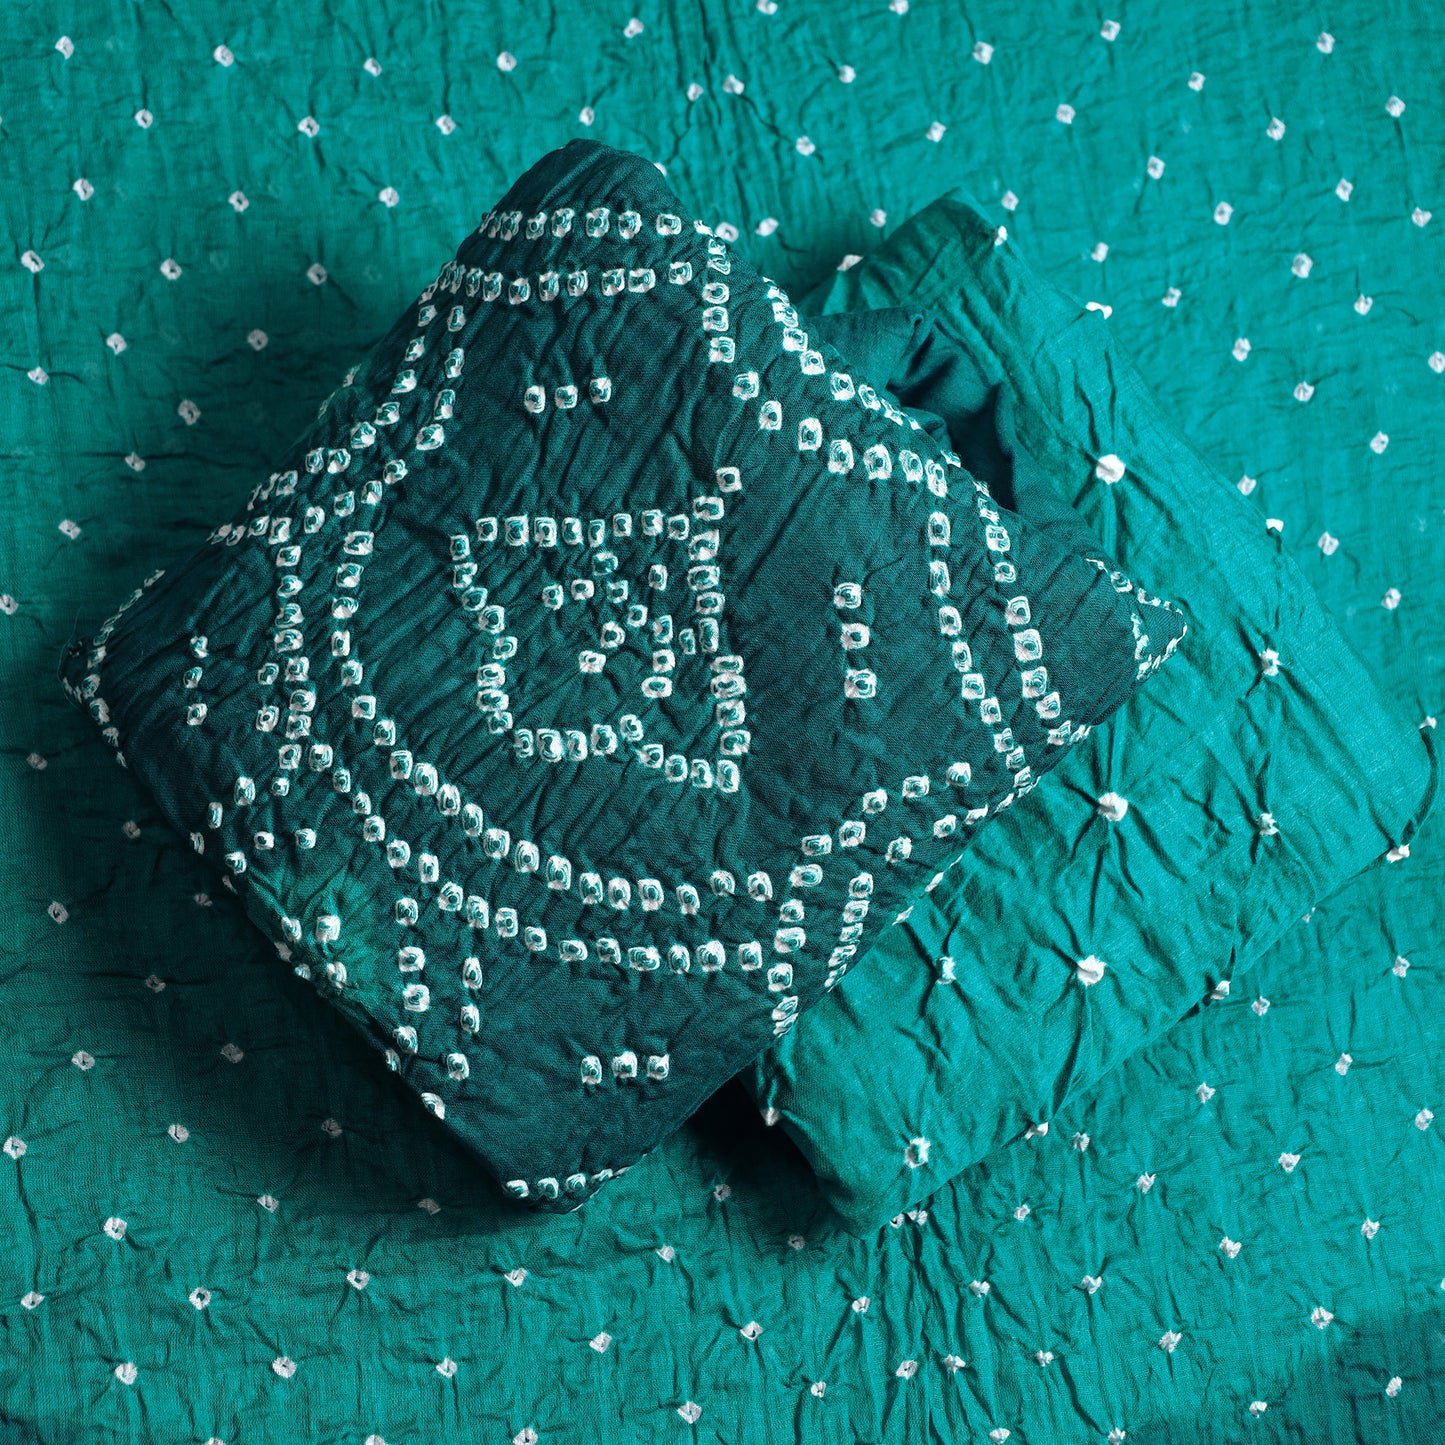 Green - 3pc Kutch Bandhani Tie-Dye Satin Cotton Suit Material Set 144